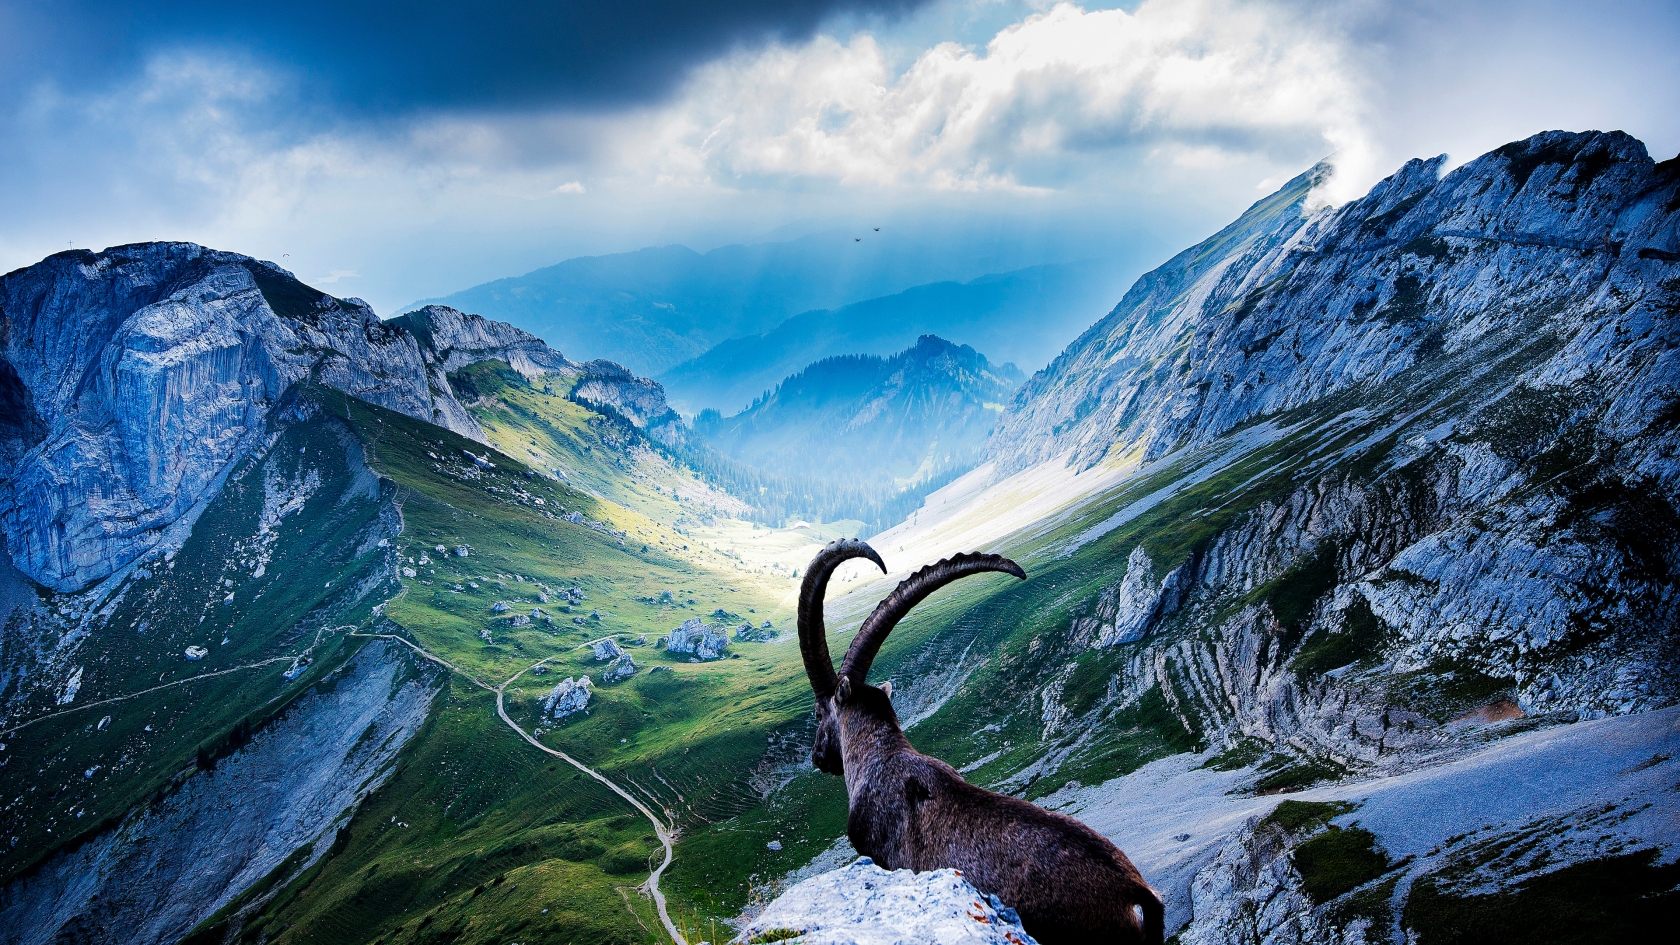 Goat at Mount Pilatus for 1680 x 945 HDTV resolution